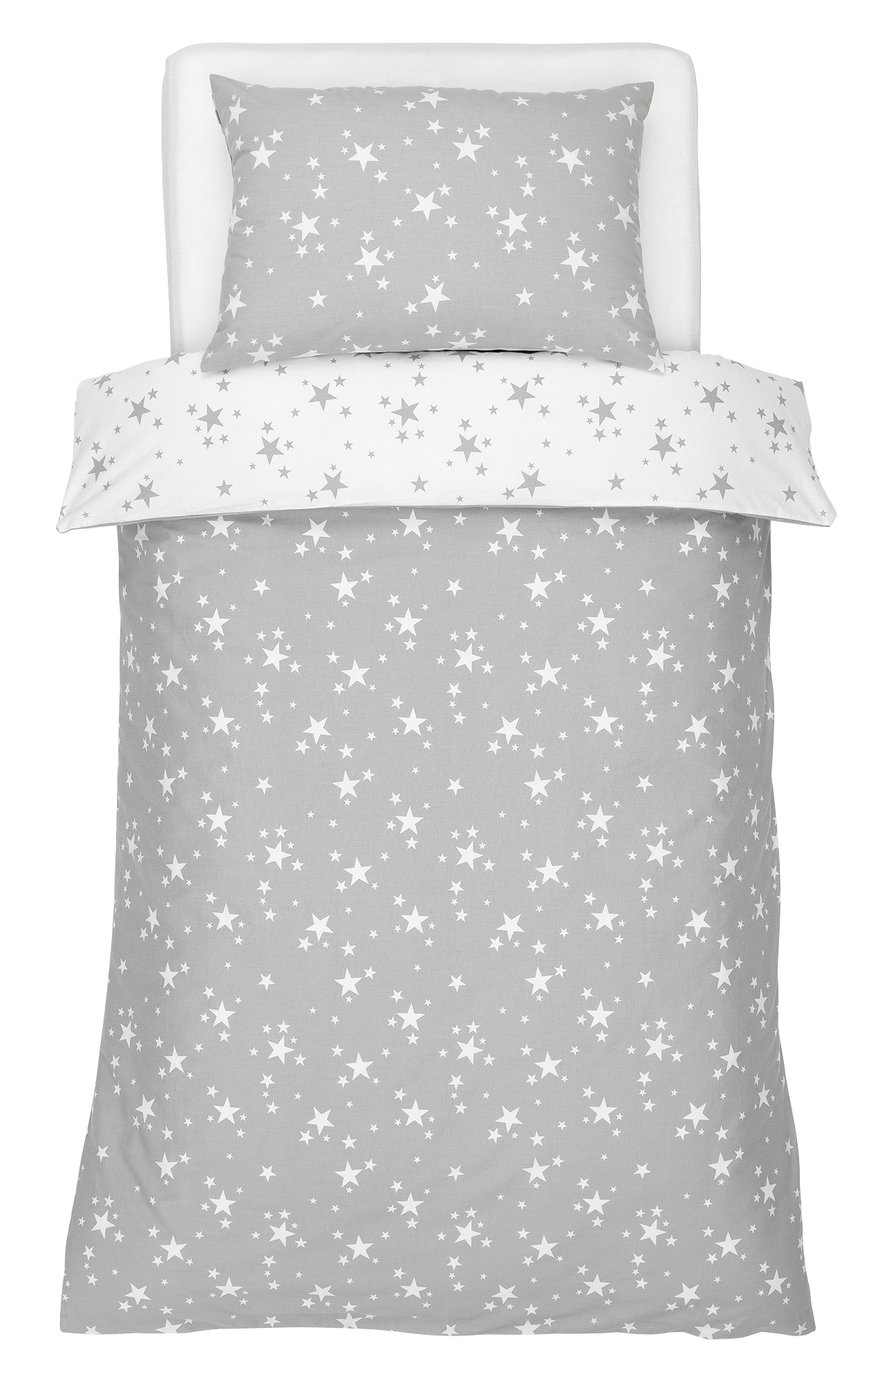 Argos Home Grey Brushed Cotton Star Bedding Set - Single